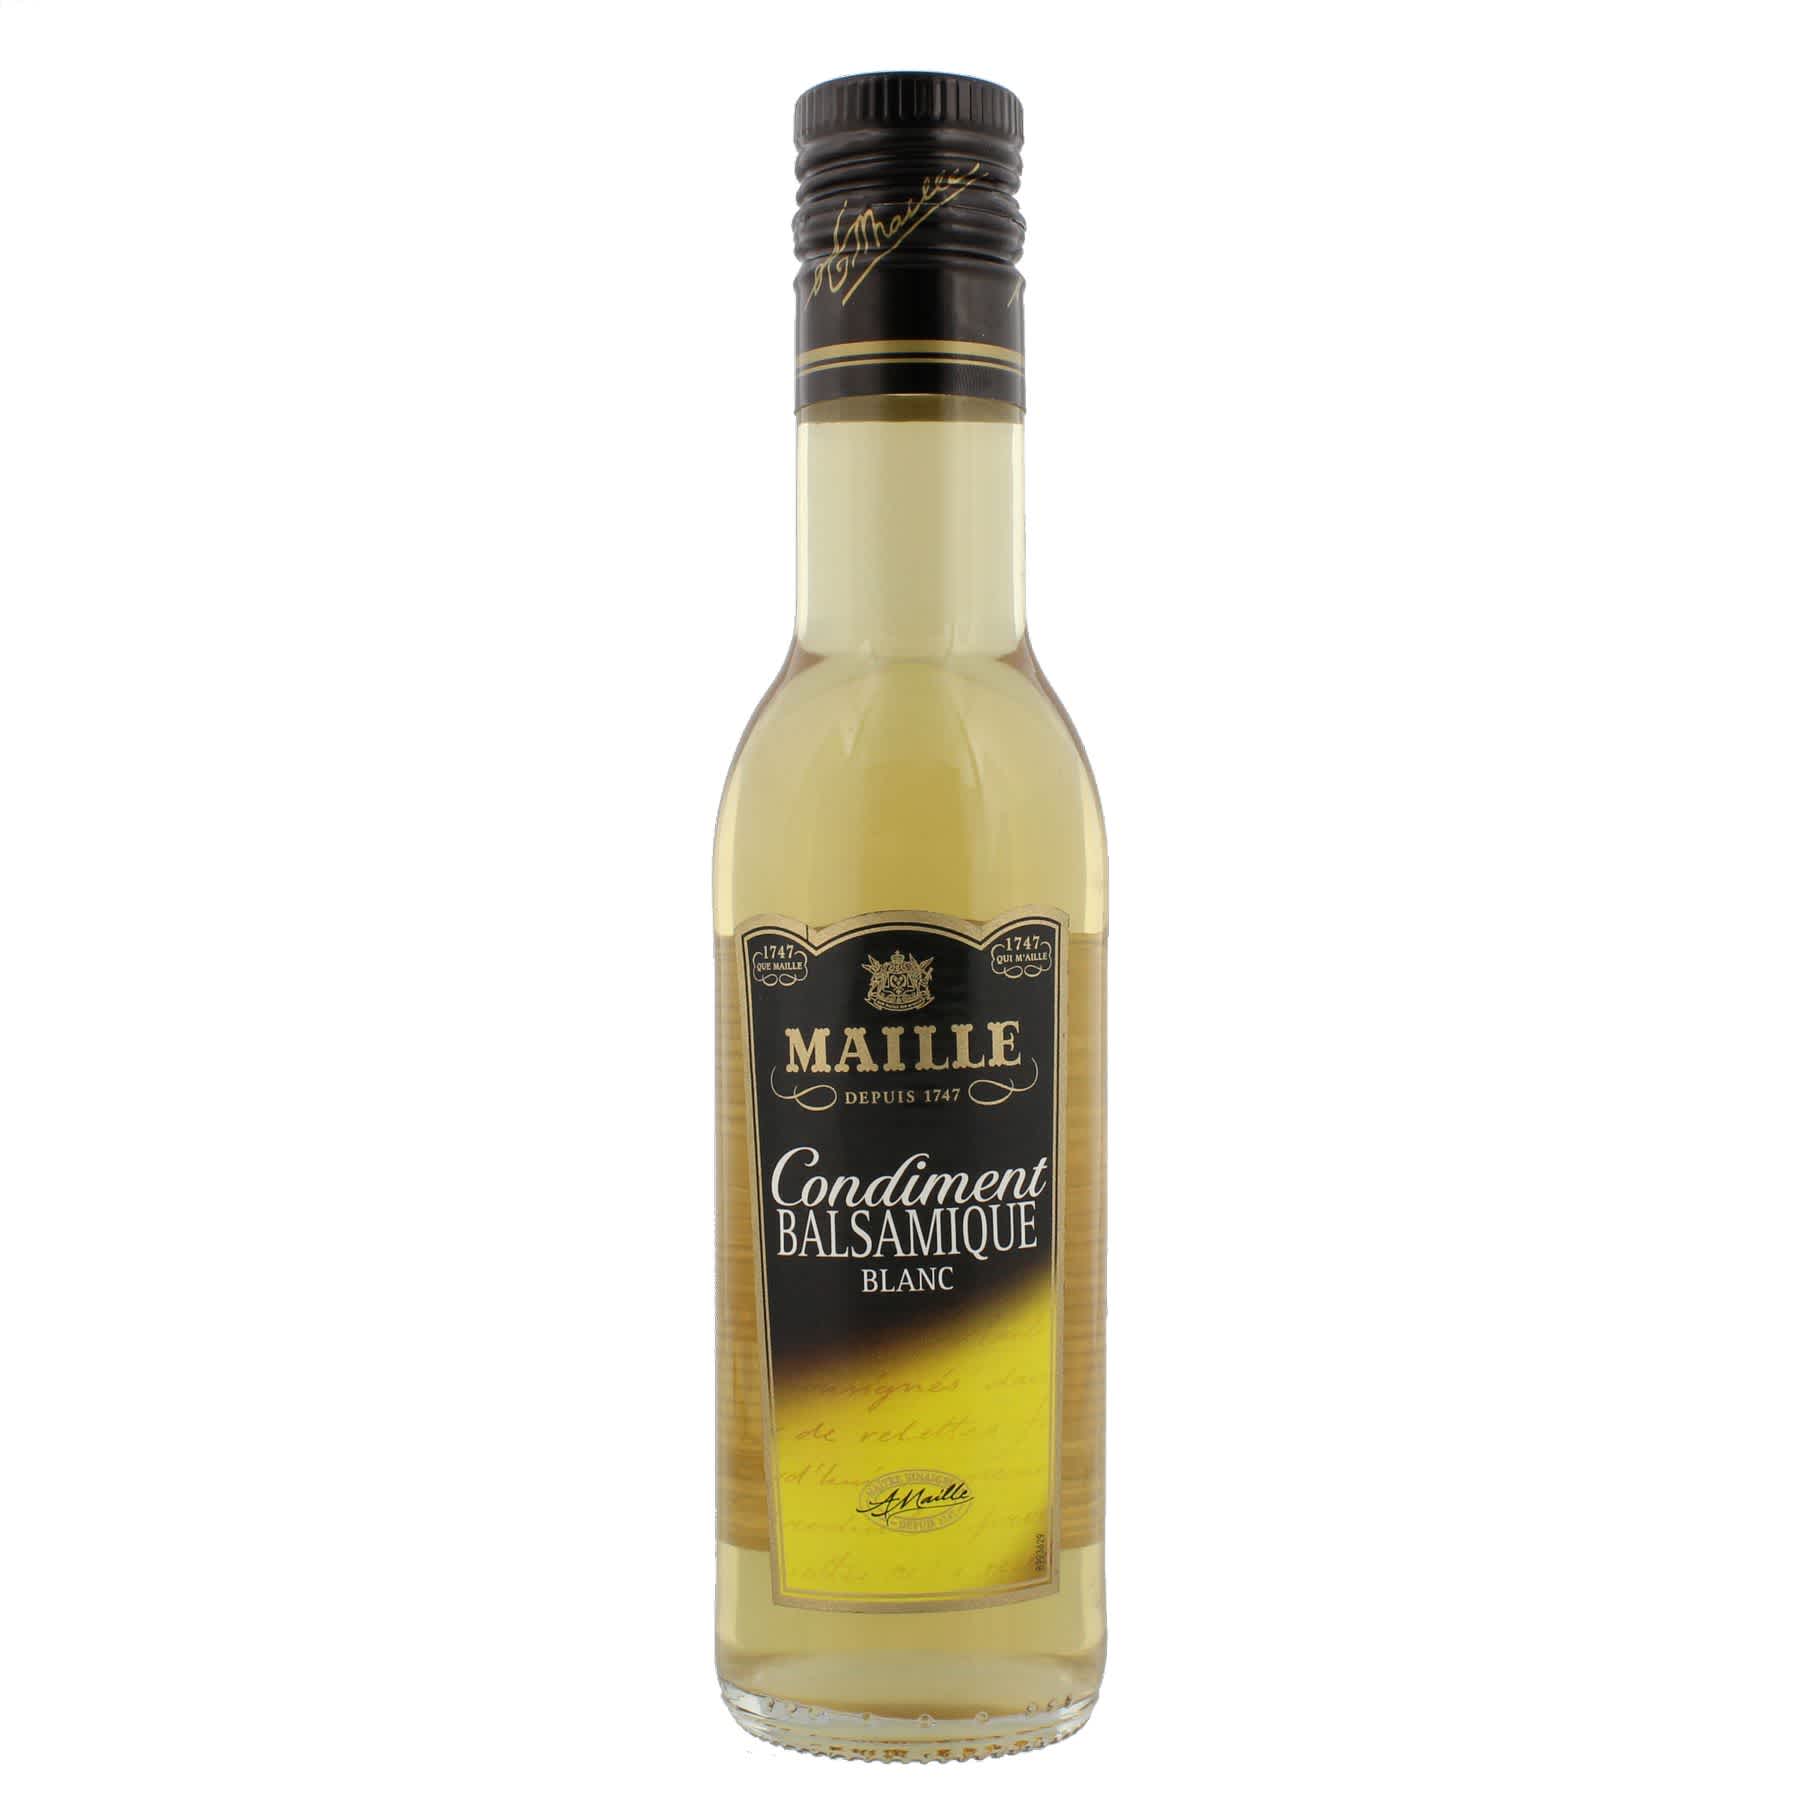 Maille - Condiment balsamique blanc, 250 ml, overview